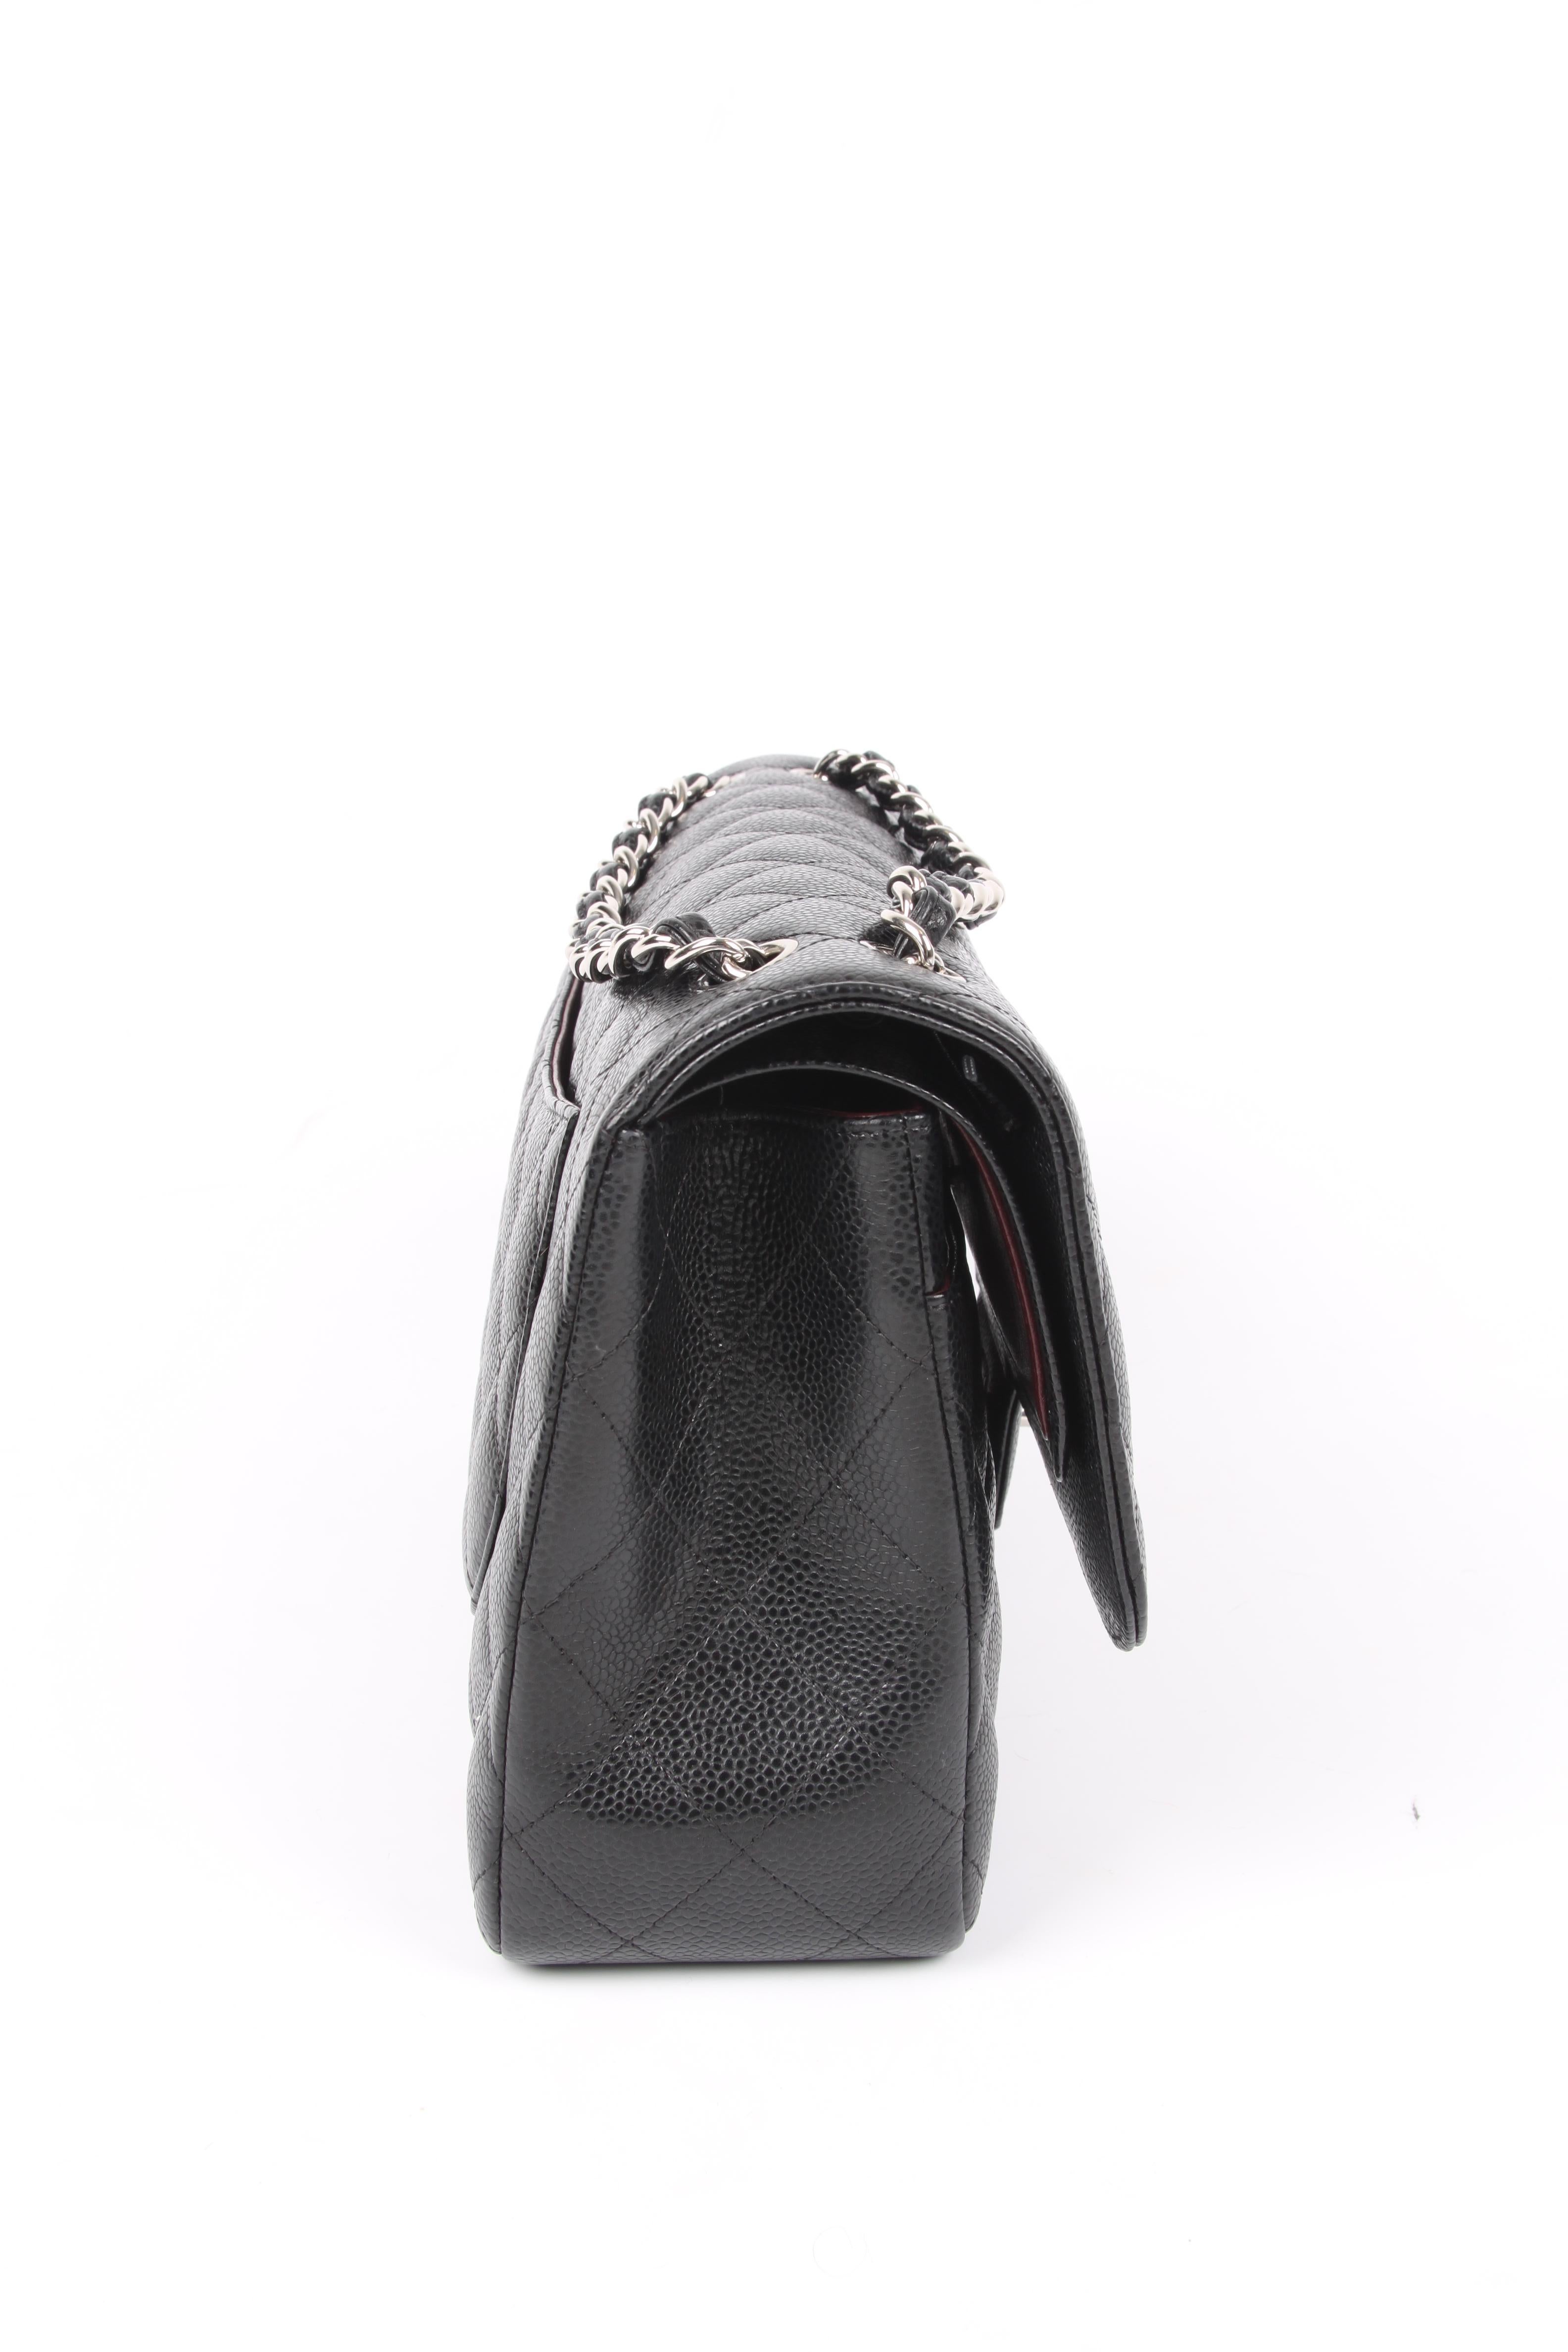 Black Chanel 2.55 Timeless Jumbo Double Flap Bag - black caviar leather/silver